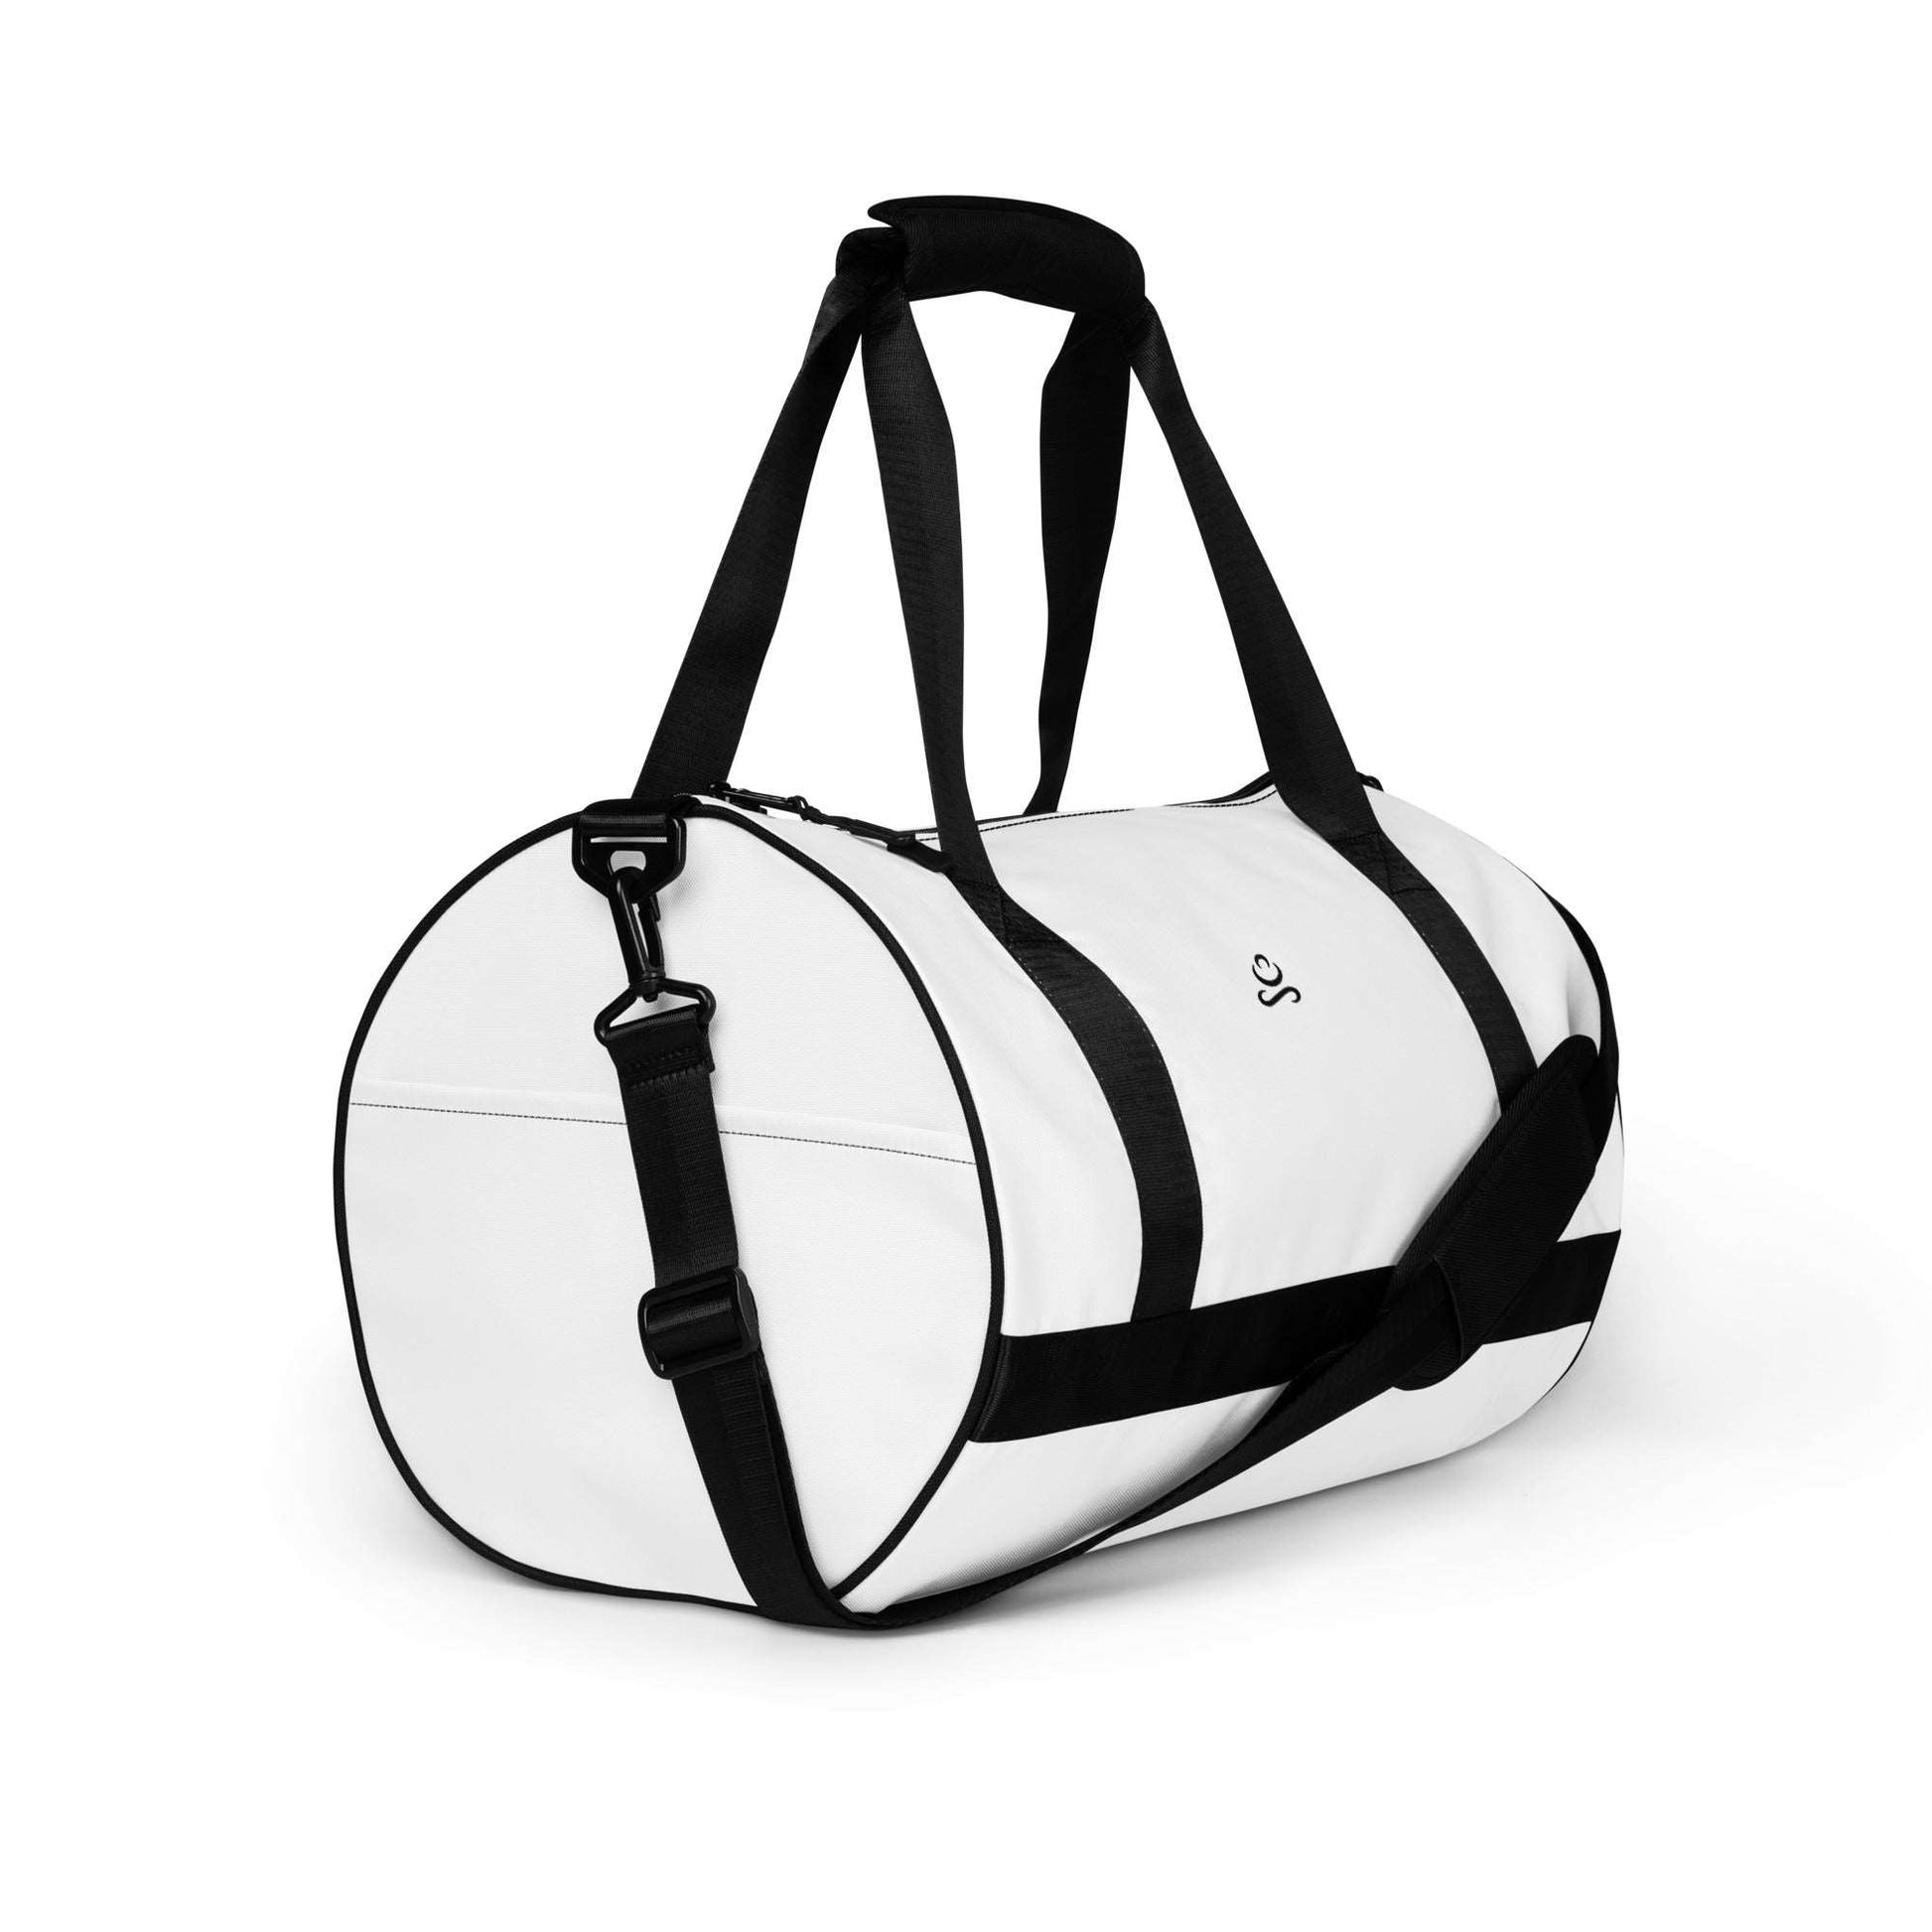  Lightweight Gym Bag by Jain Yoga sold by Jain Yoga